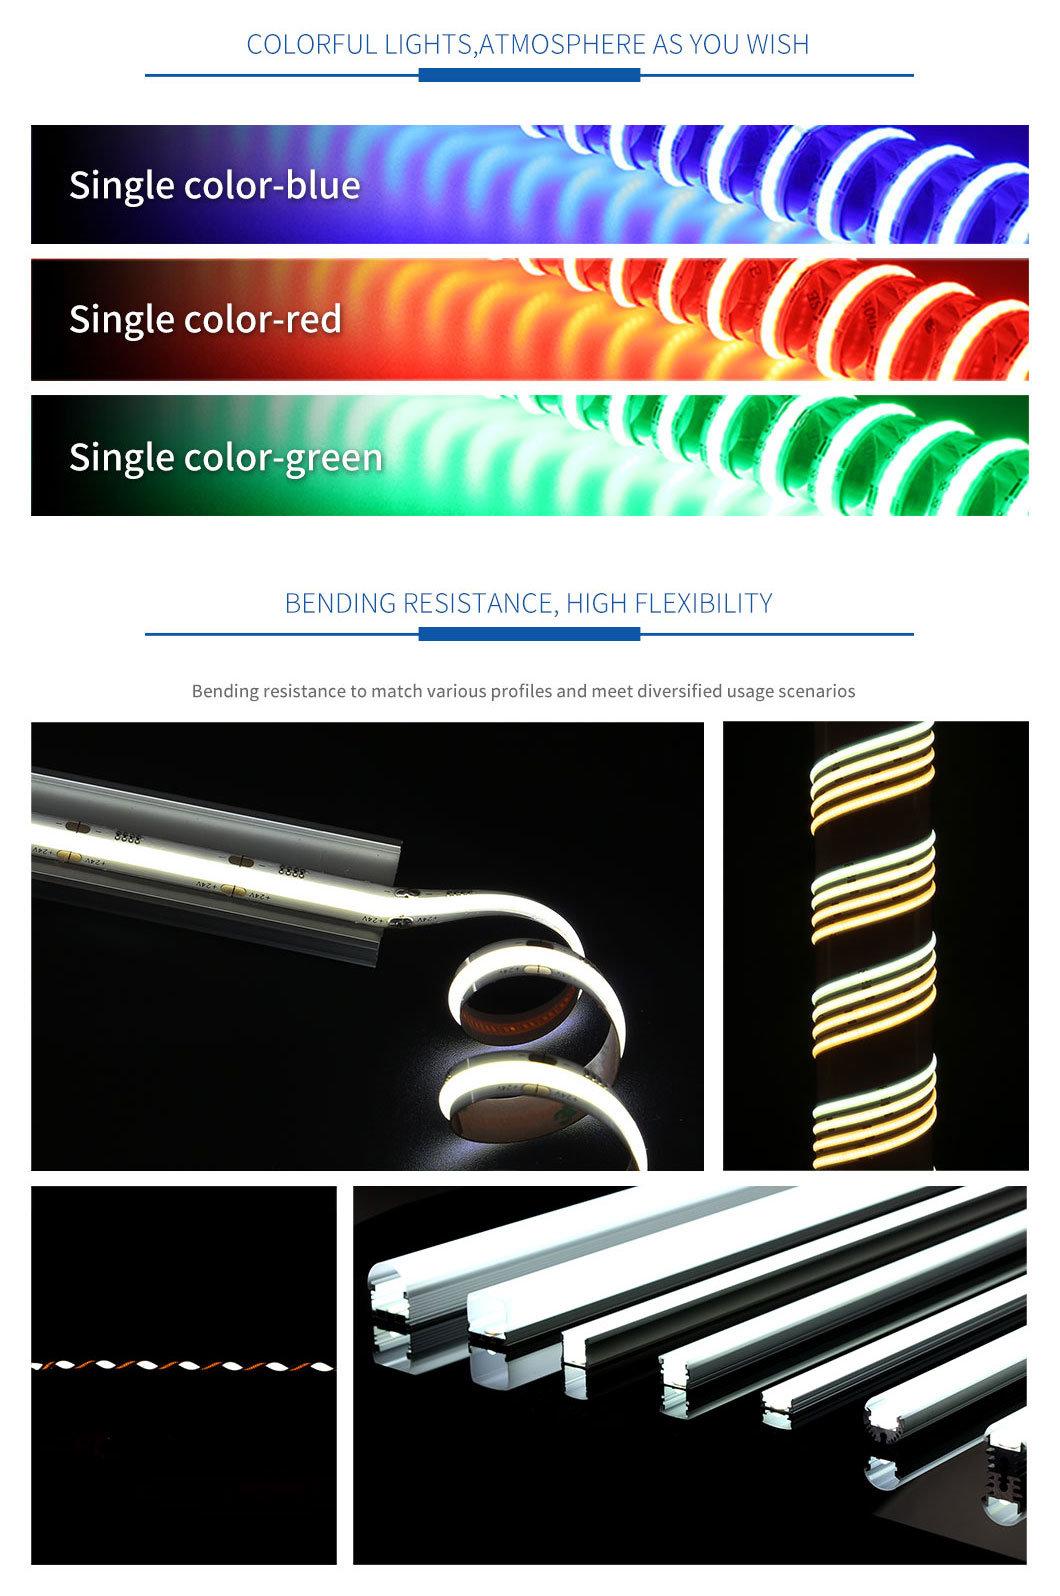 RGB LED Strip, Wholesale LED Strip Light, Decoration Light, COB Strip